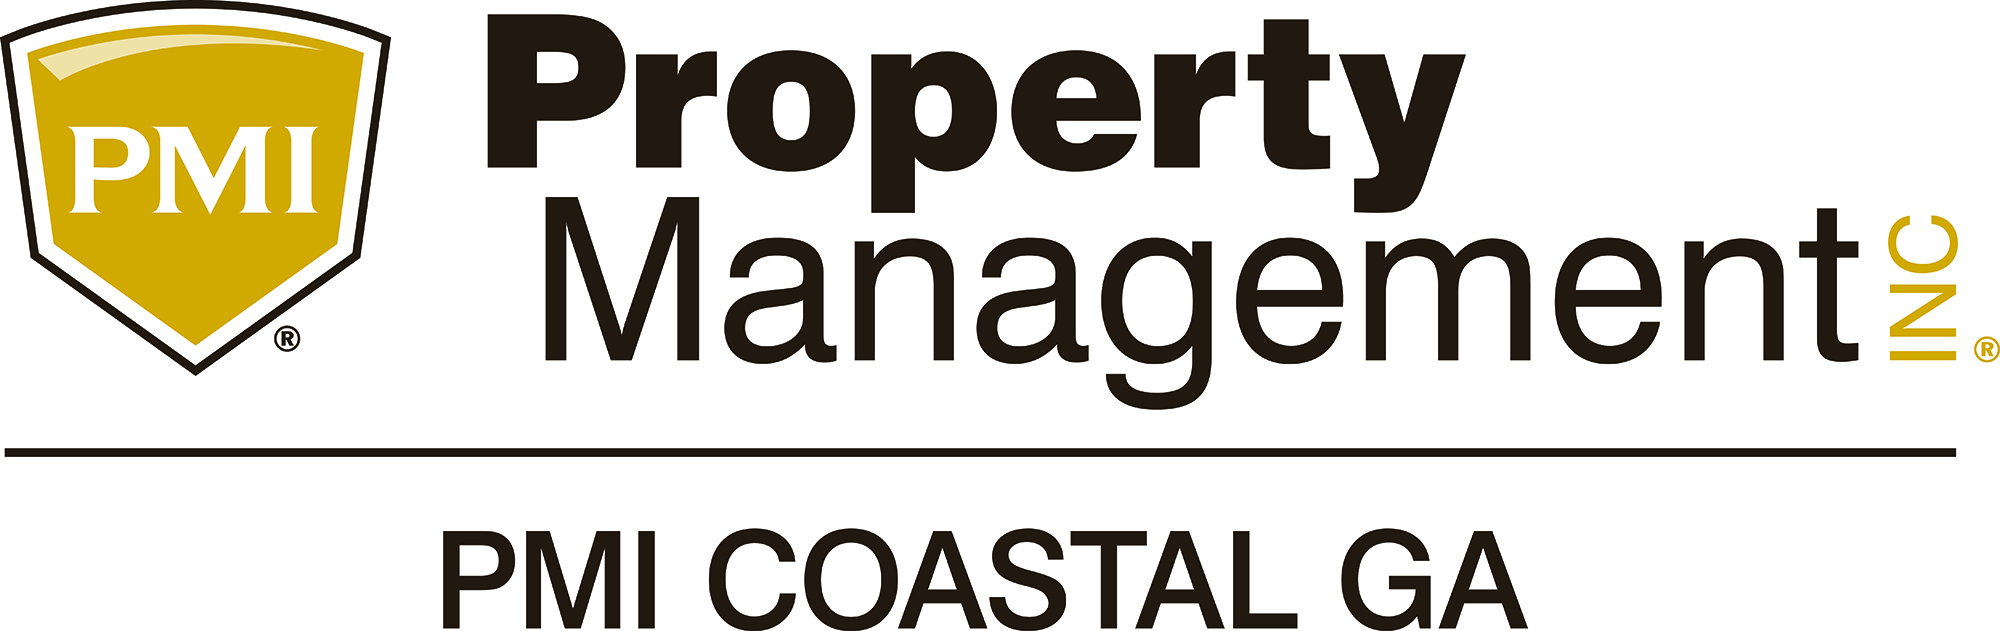 PMI Coastal GA logo